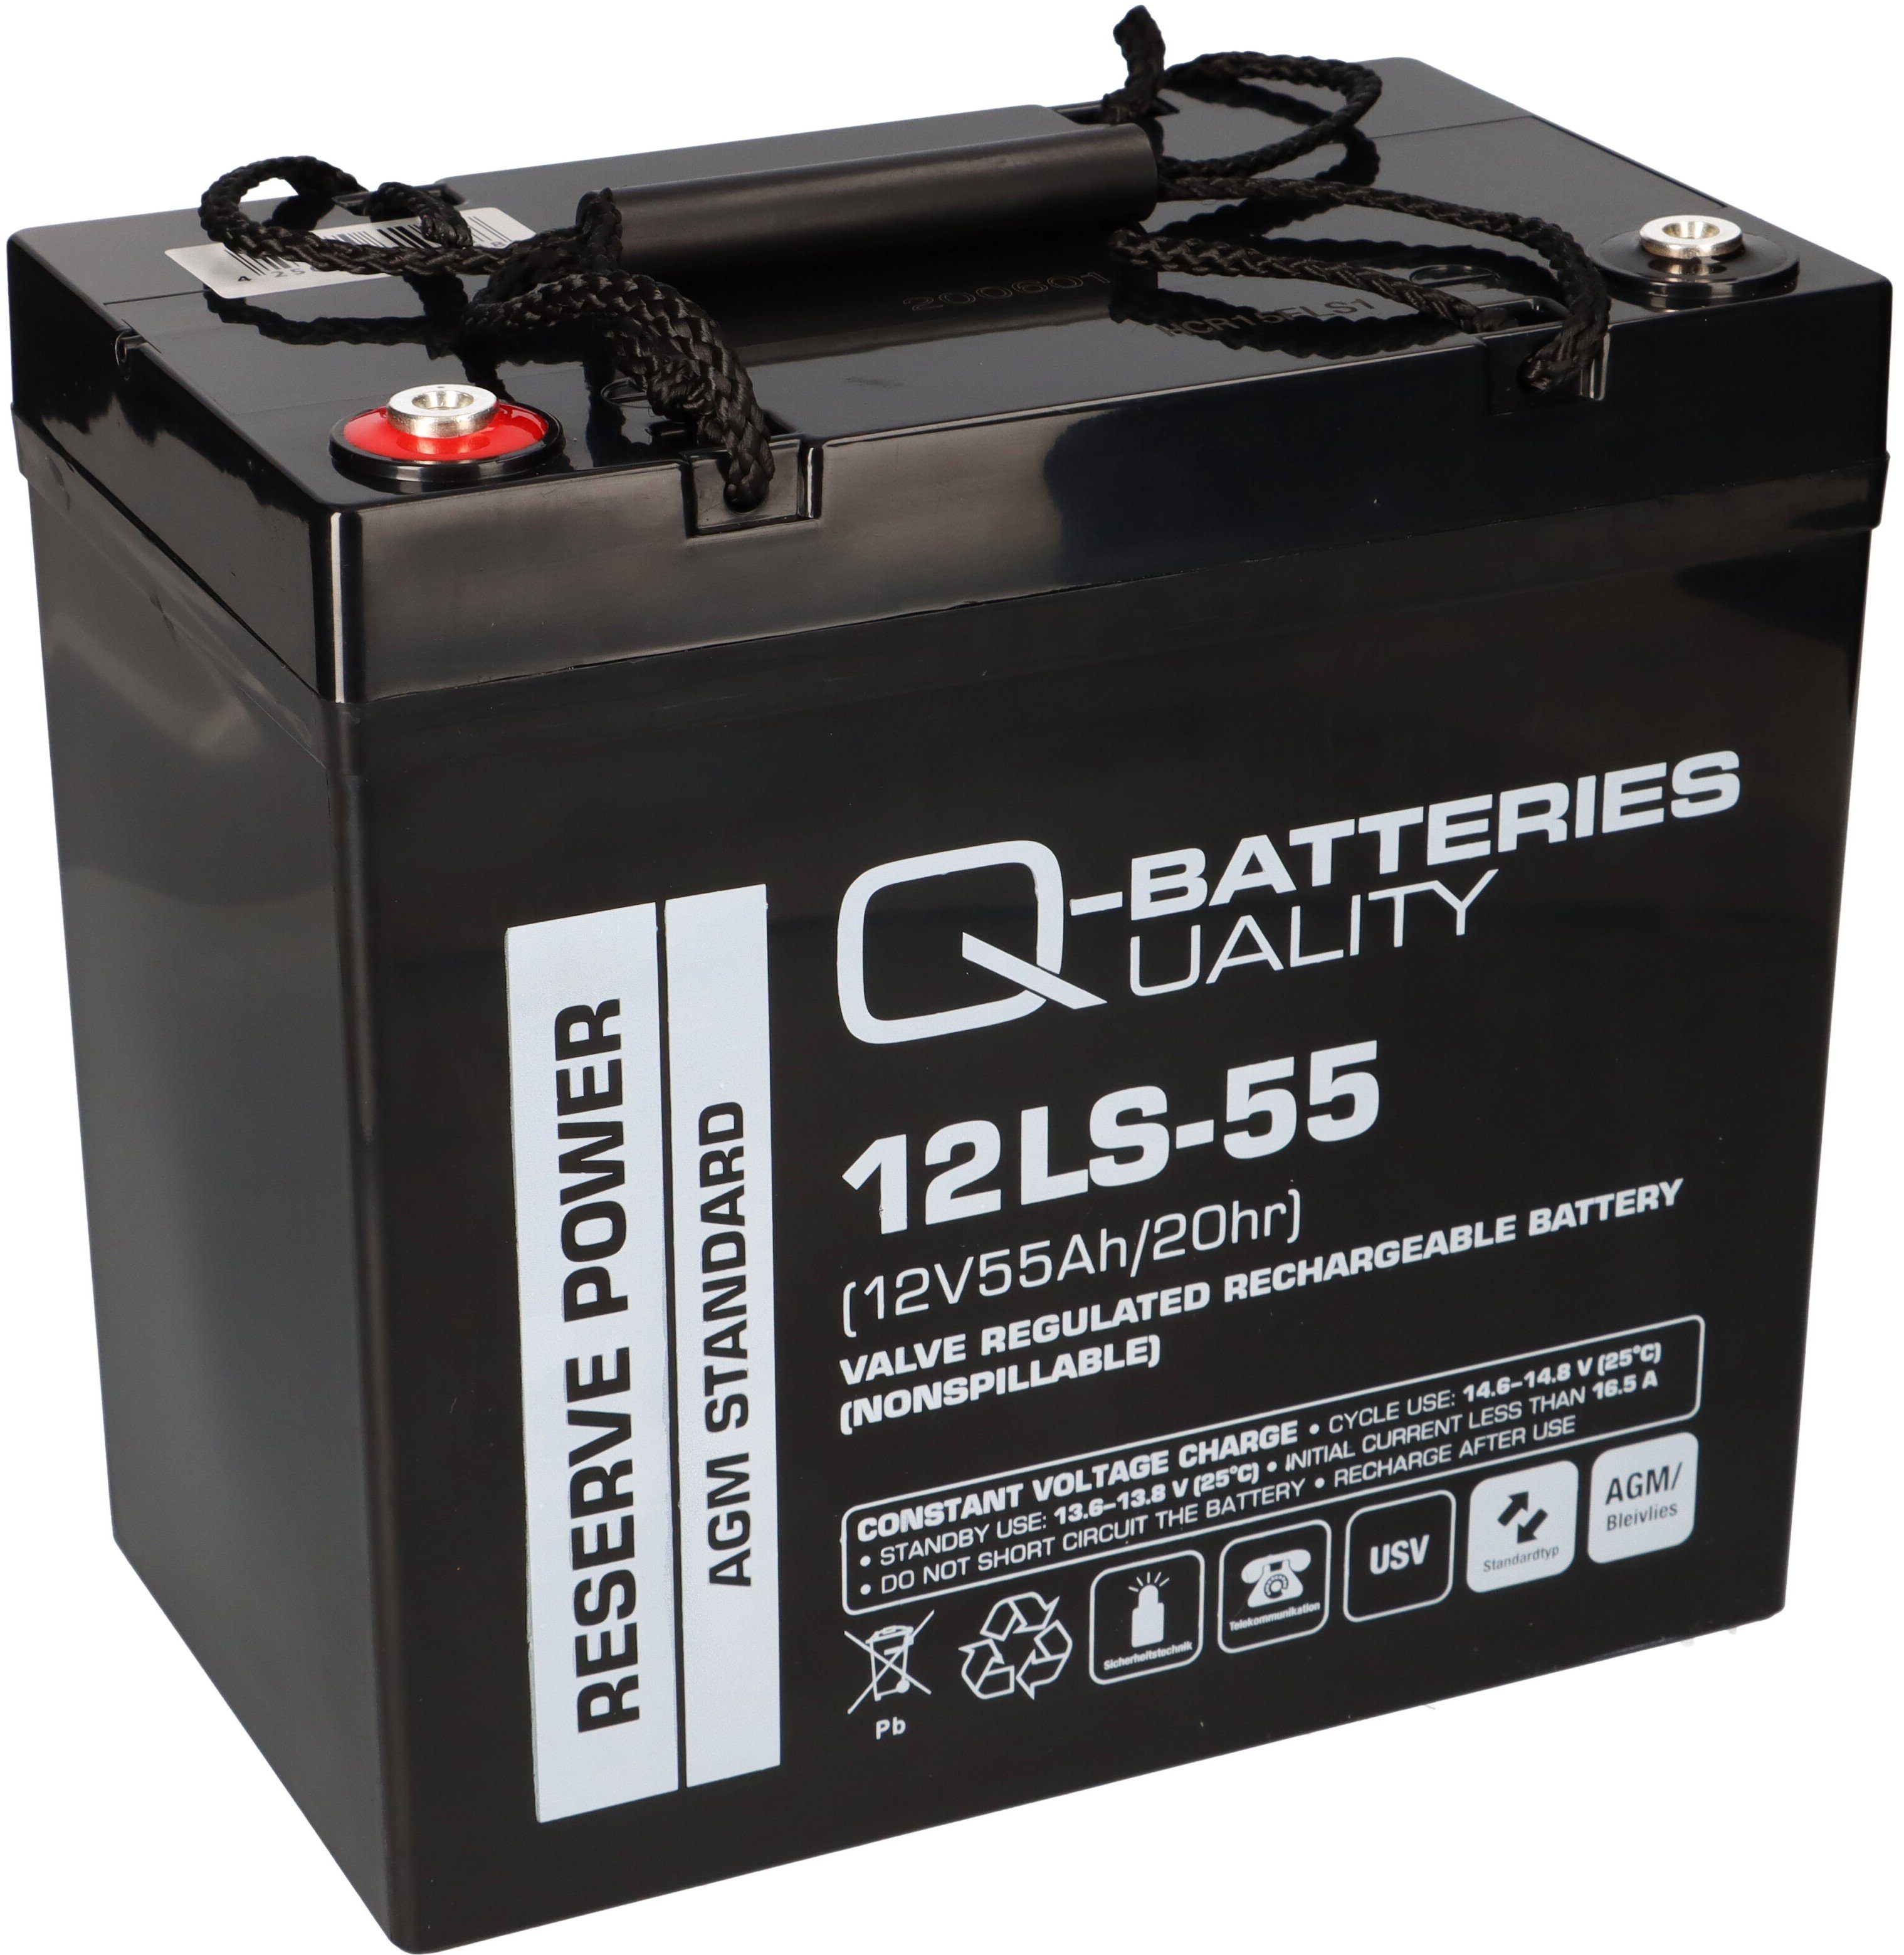 Q-Batteries Q-Batteries 12LS-55 / 12V - 55Ah Blei Akku Standard-Typ AGM VRLA 10 Bleiakkus